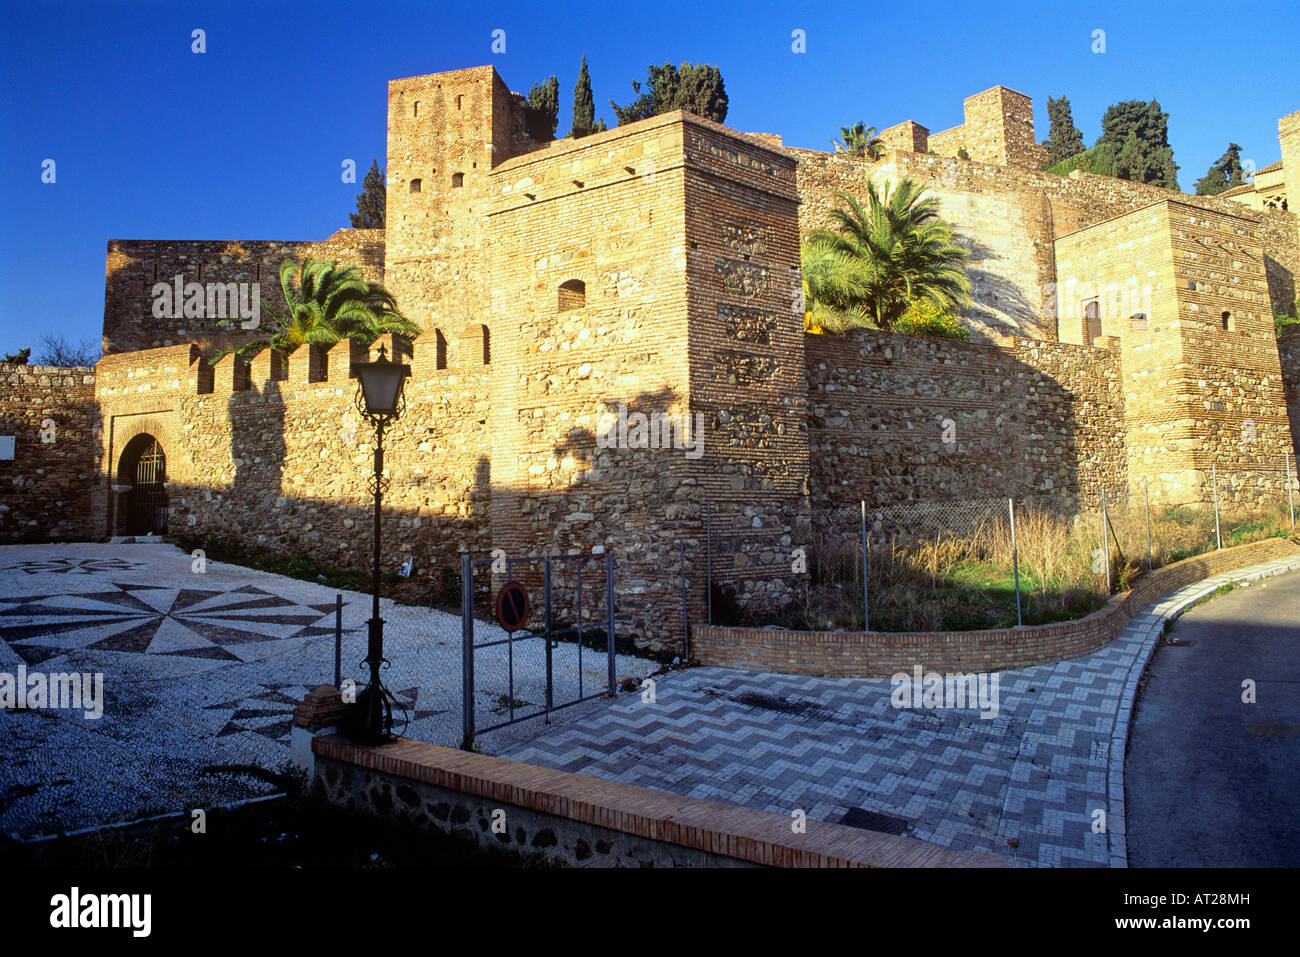 alcazaba castle city of malaga costa del sol region of andalucia province of malaga spain Stock Photo